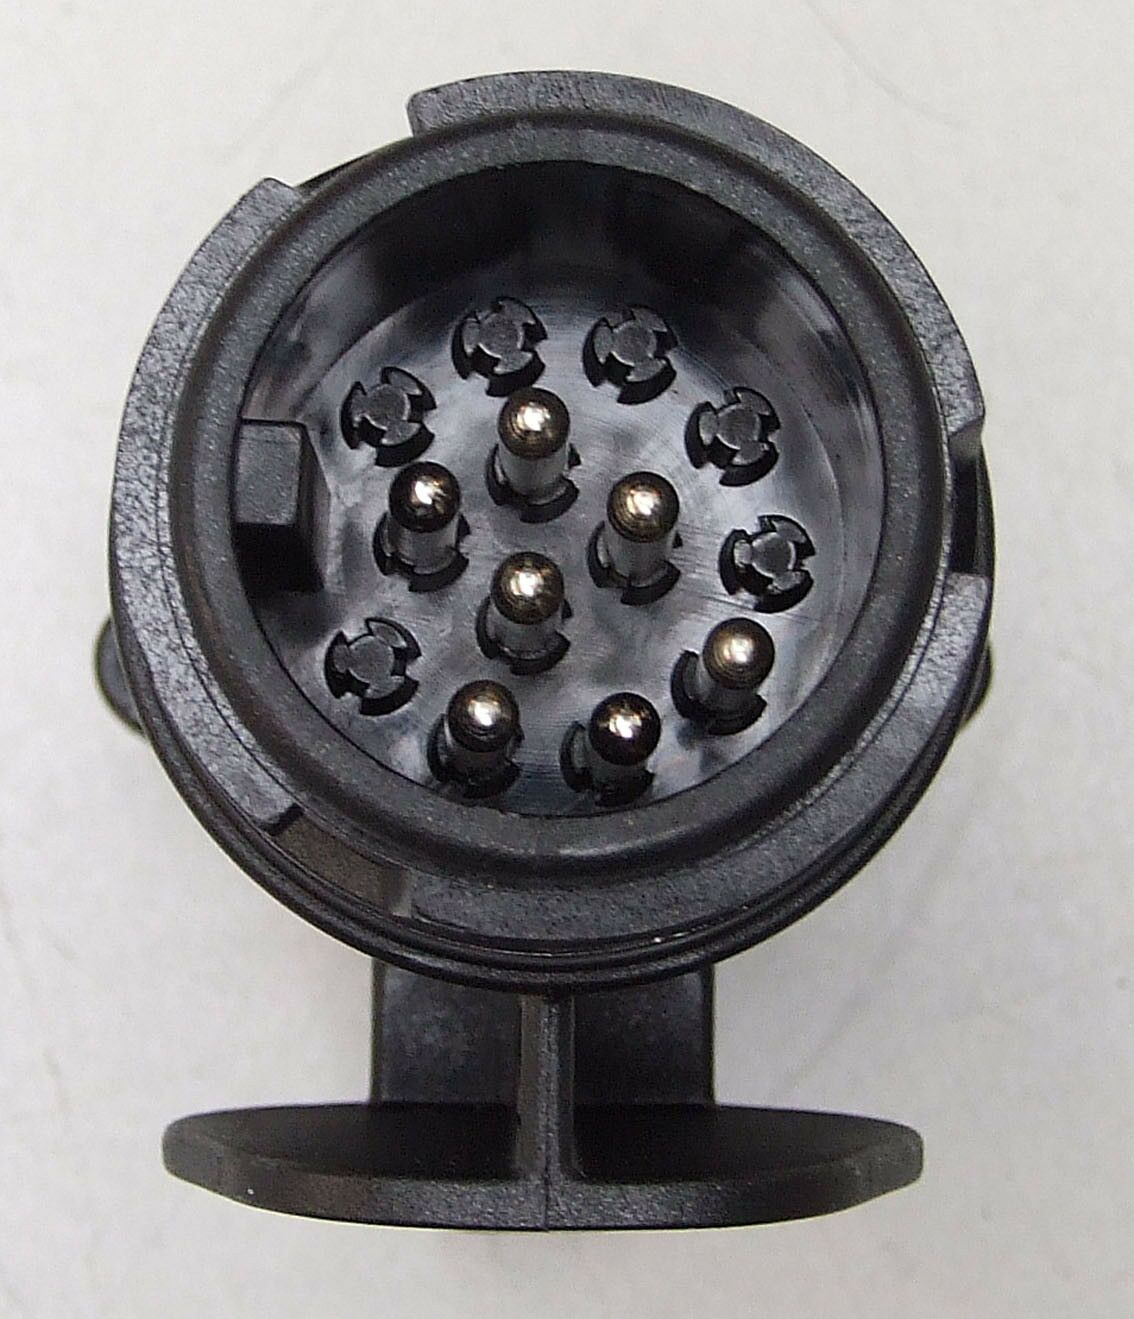 Adapter uticnica 13 / 7 pin.